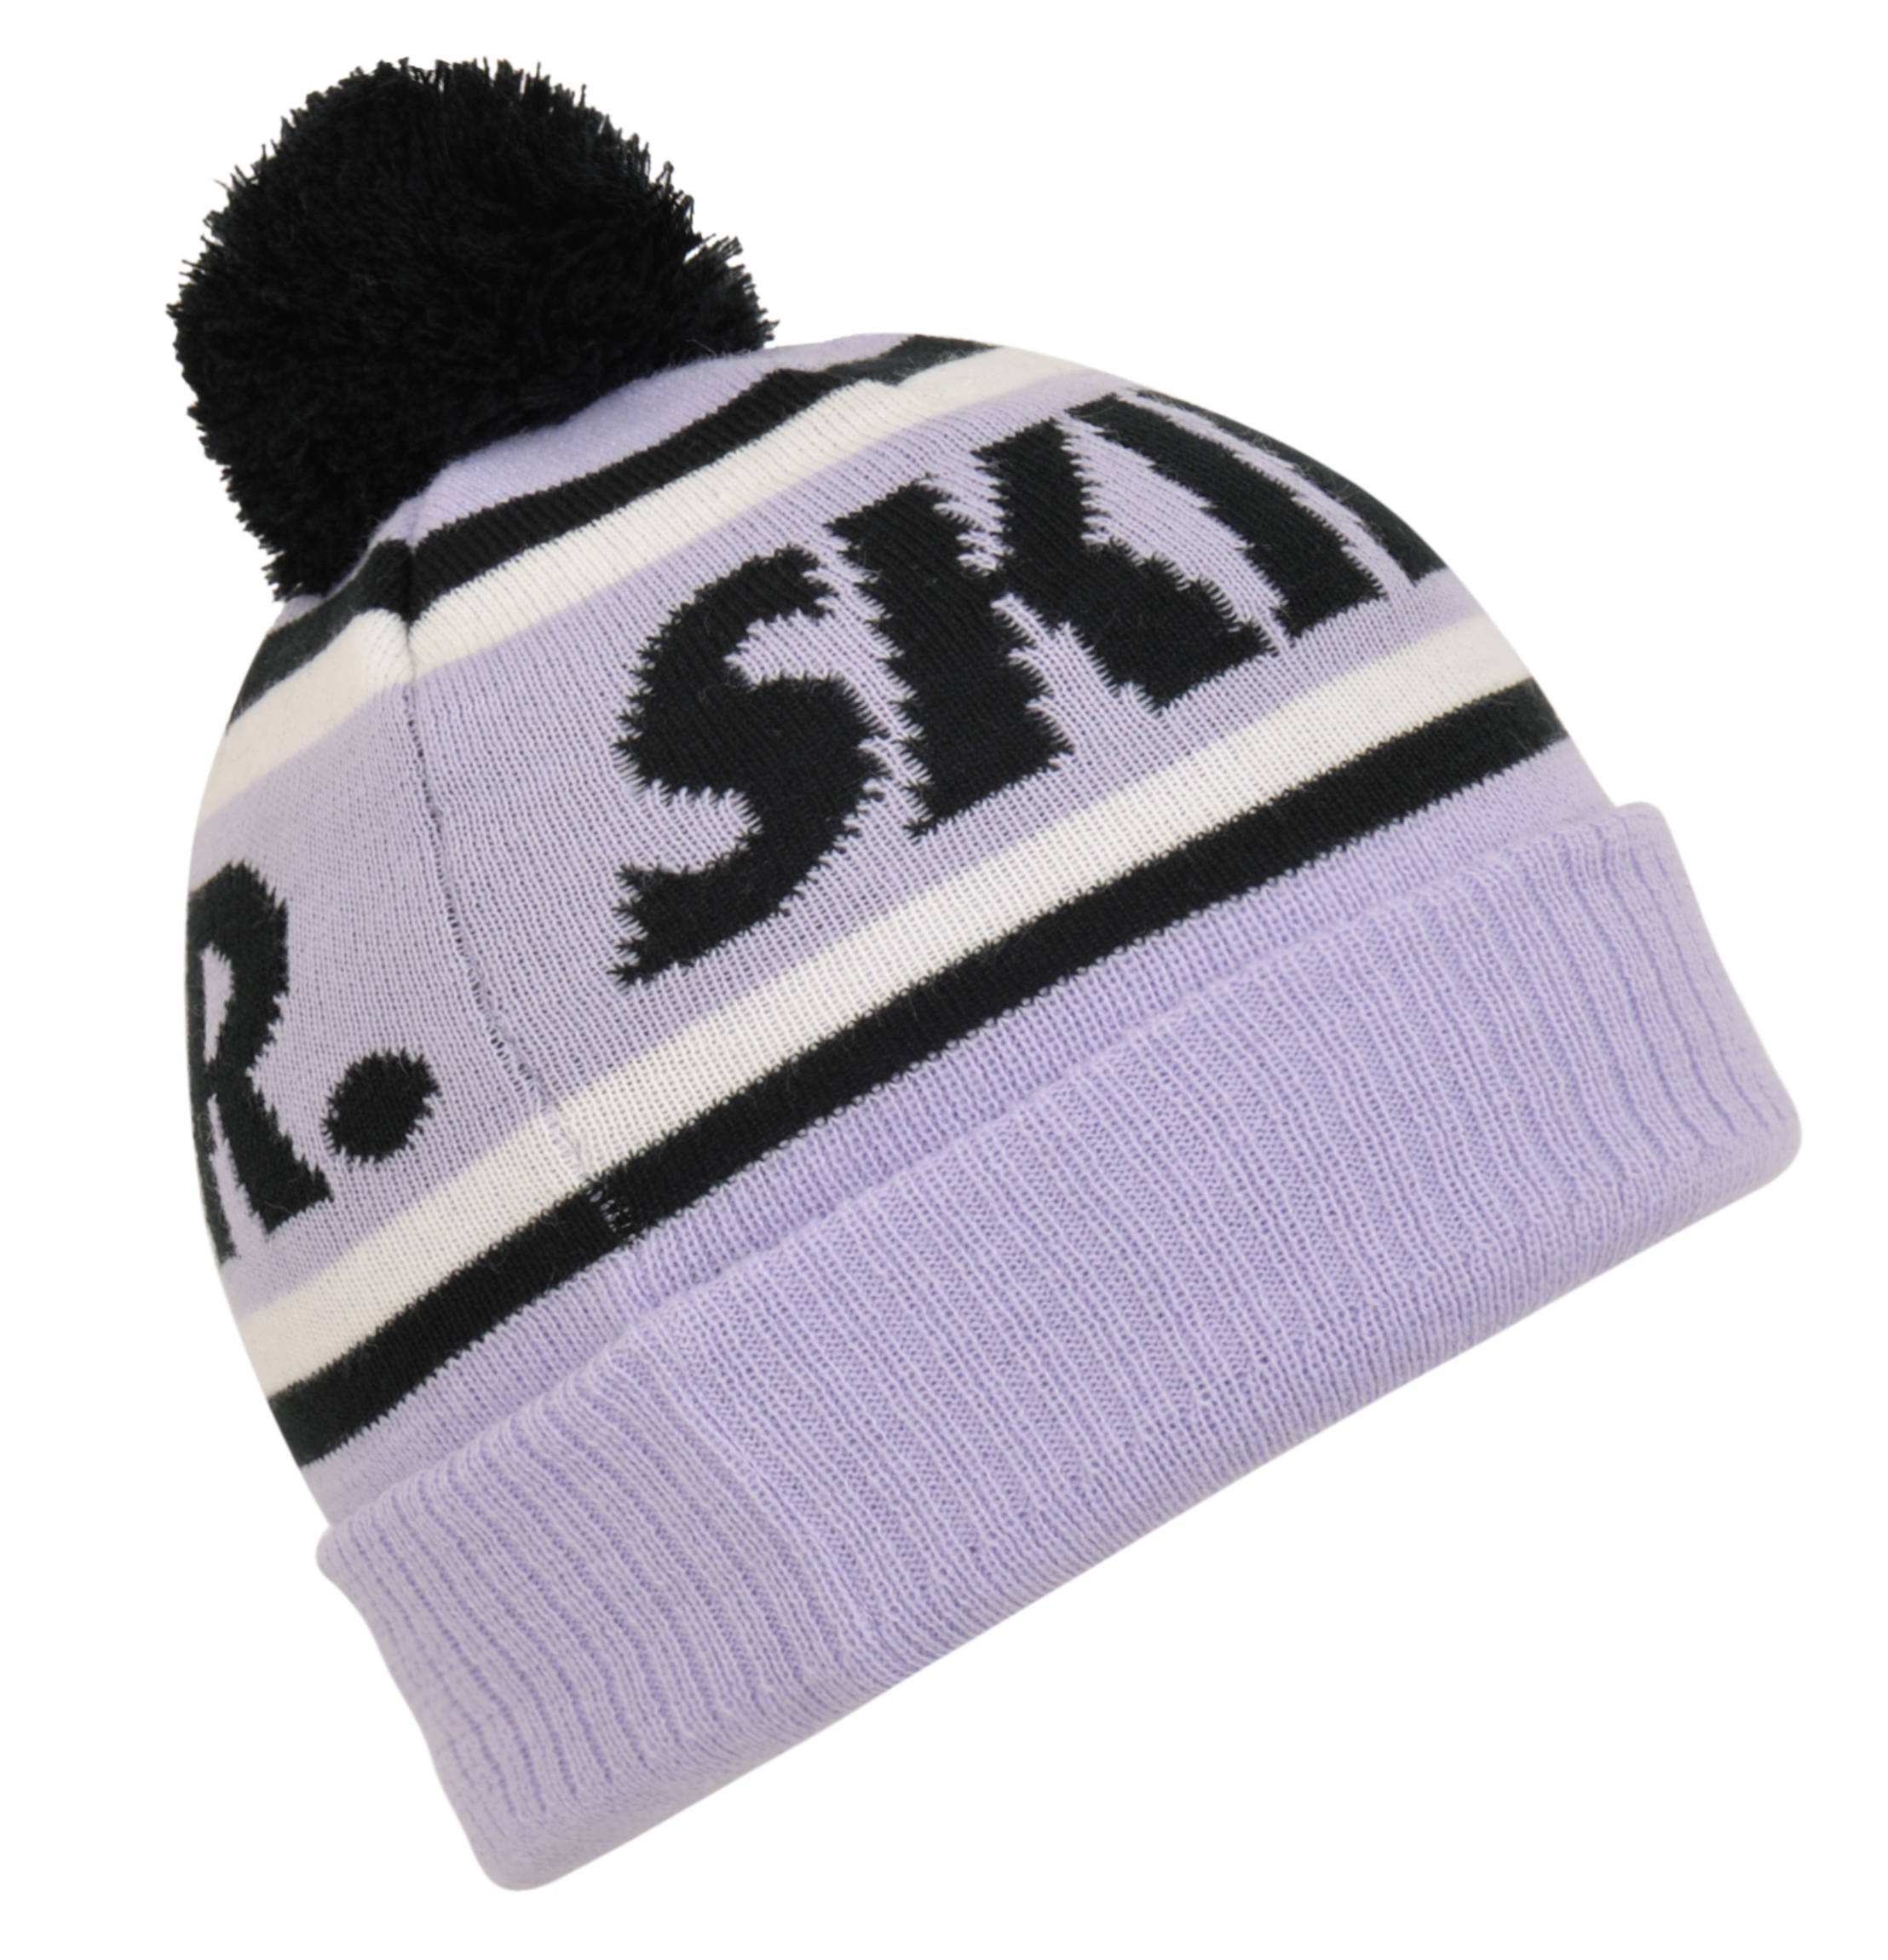 Planks Skier Ski/Snowboard Beanie Bobble Hat